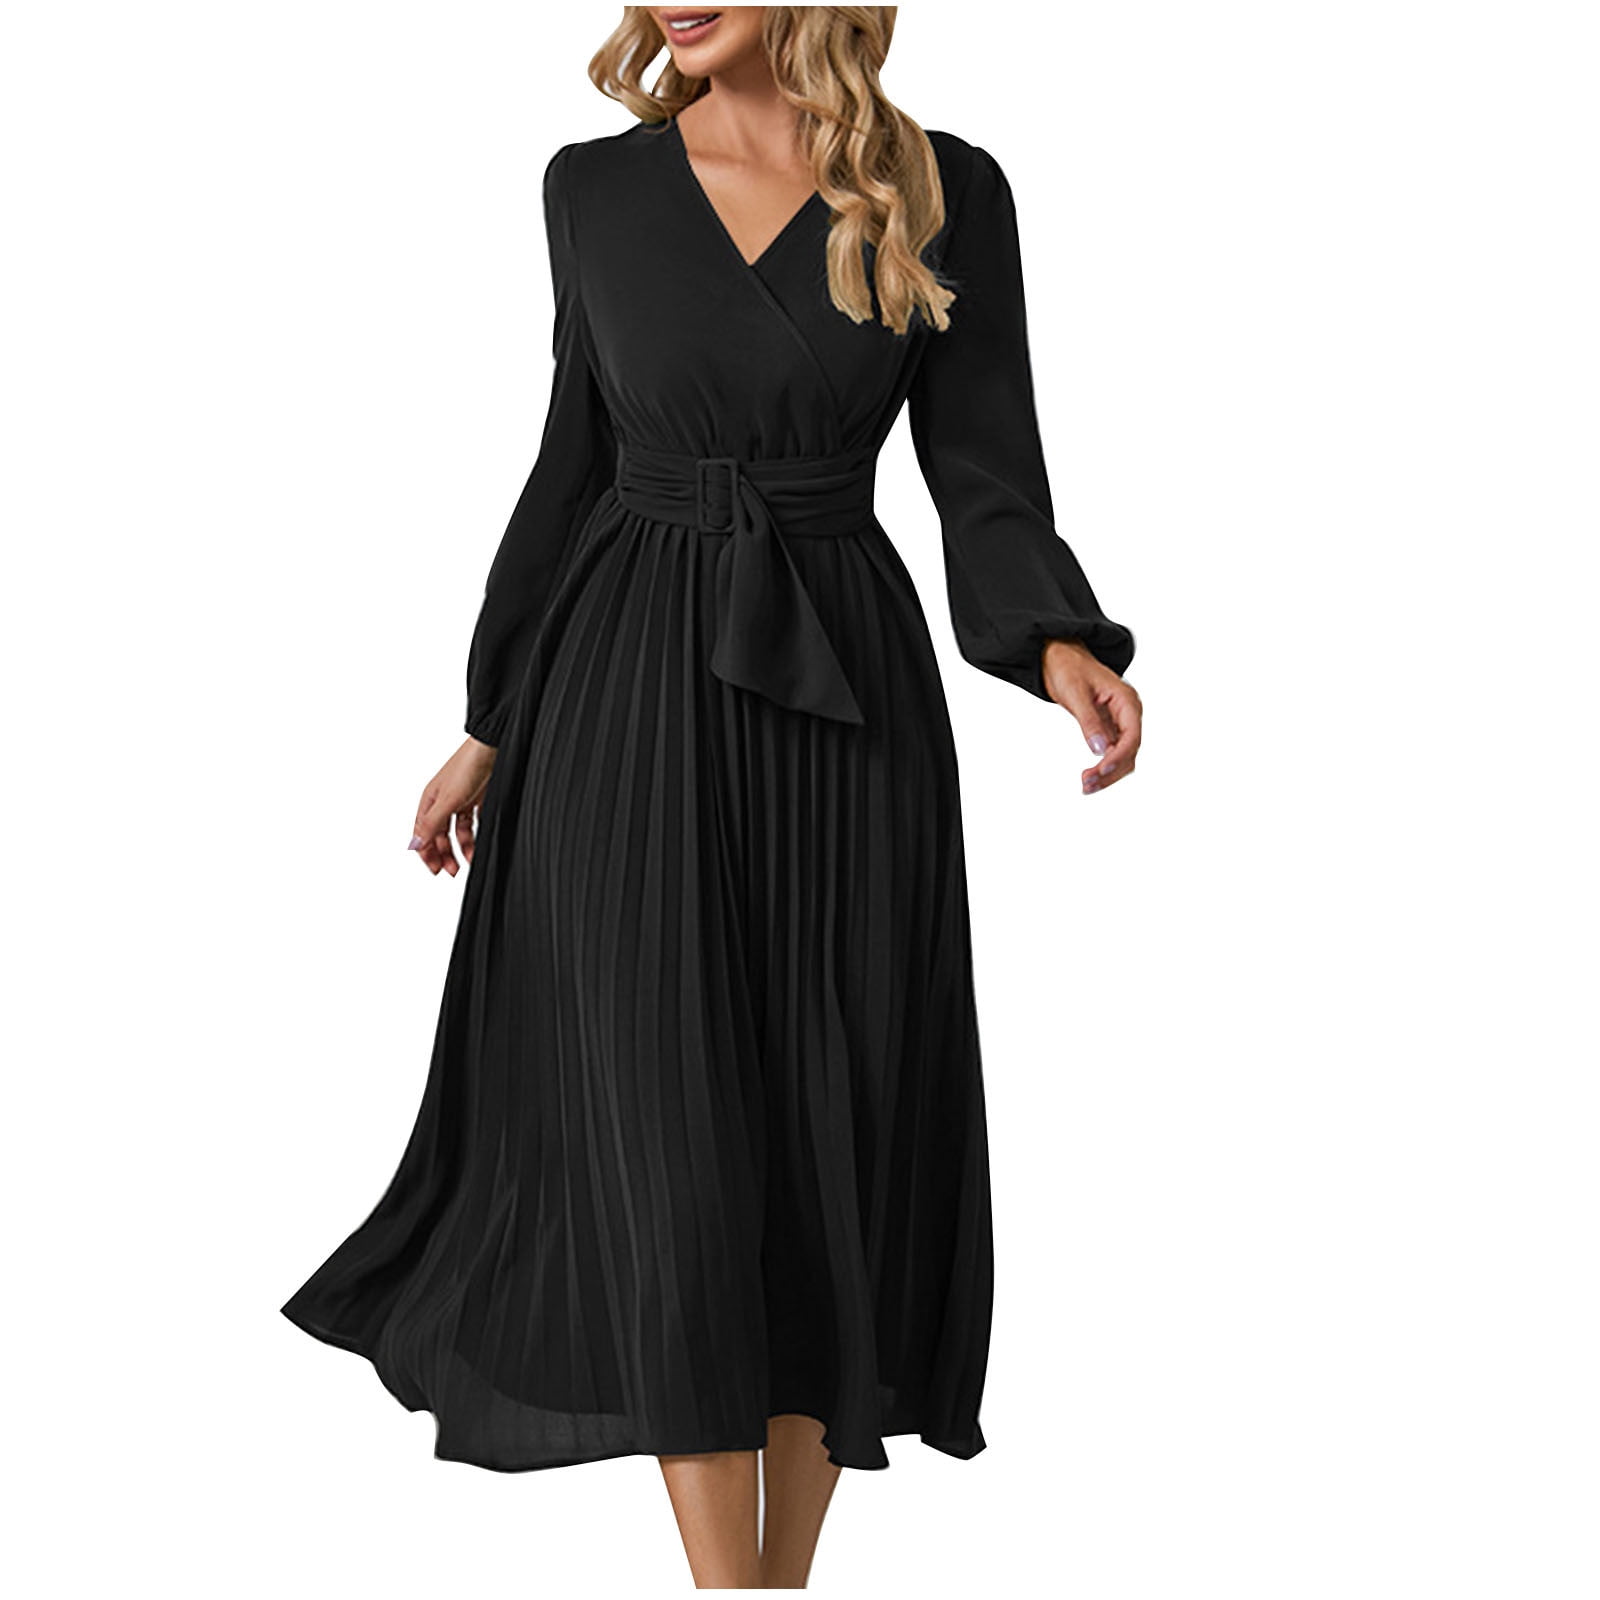 black funeral dress